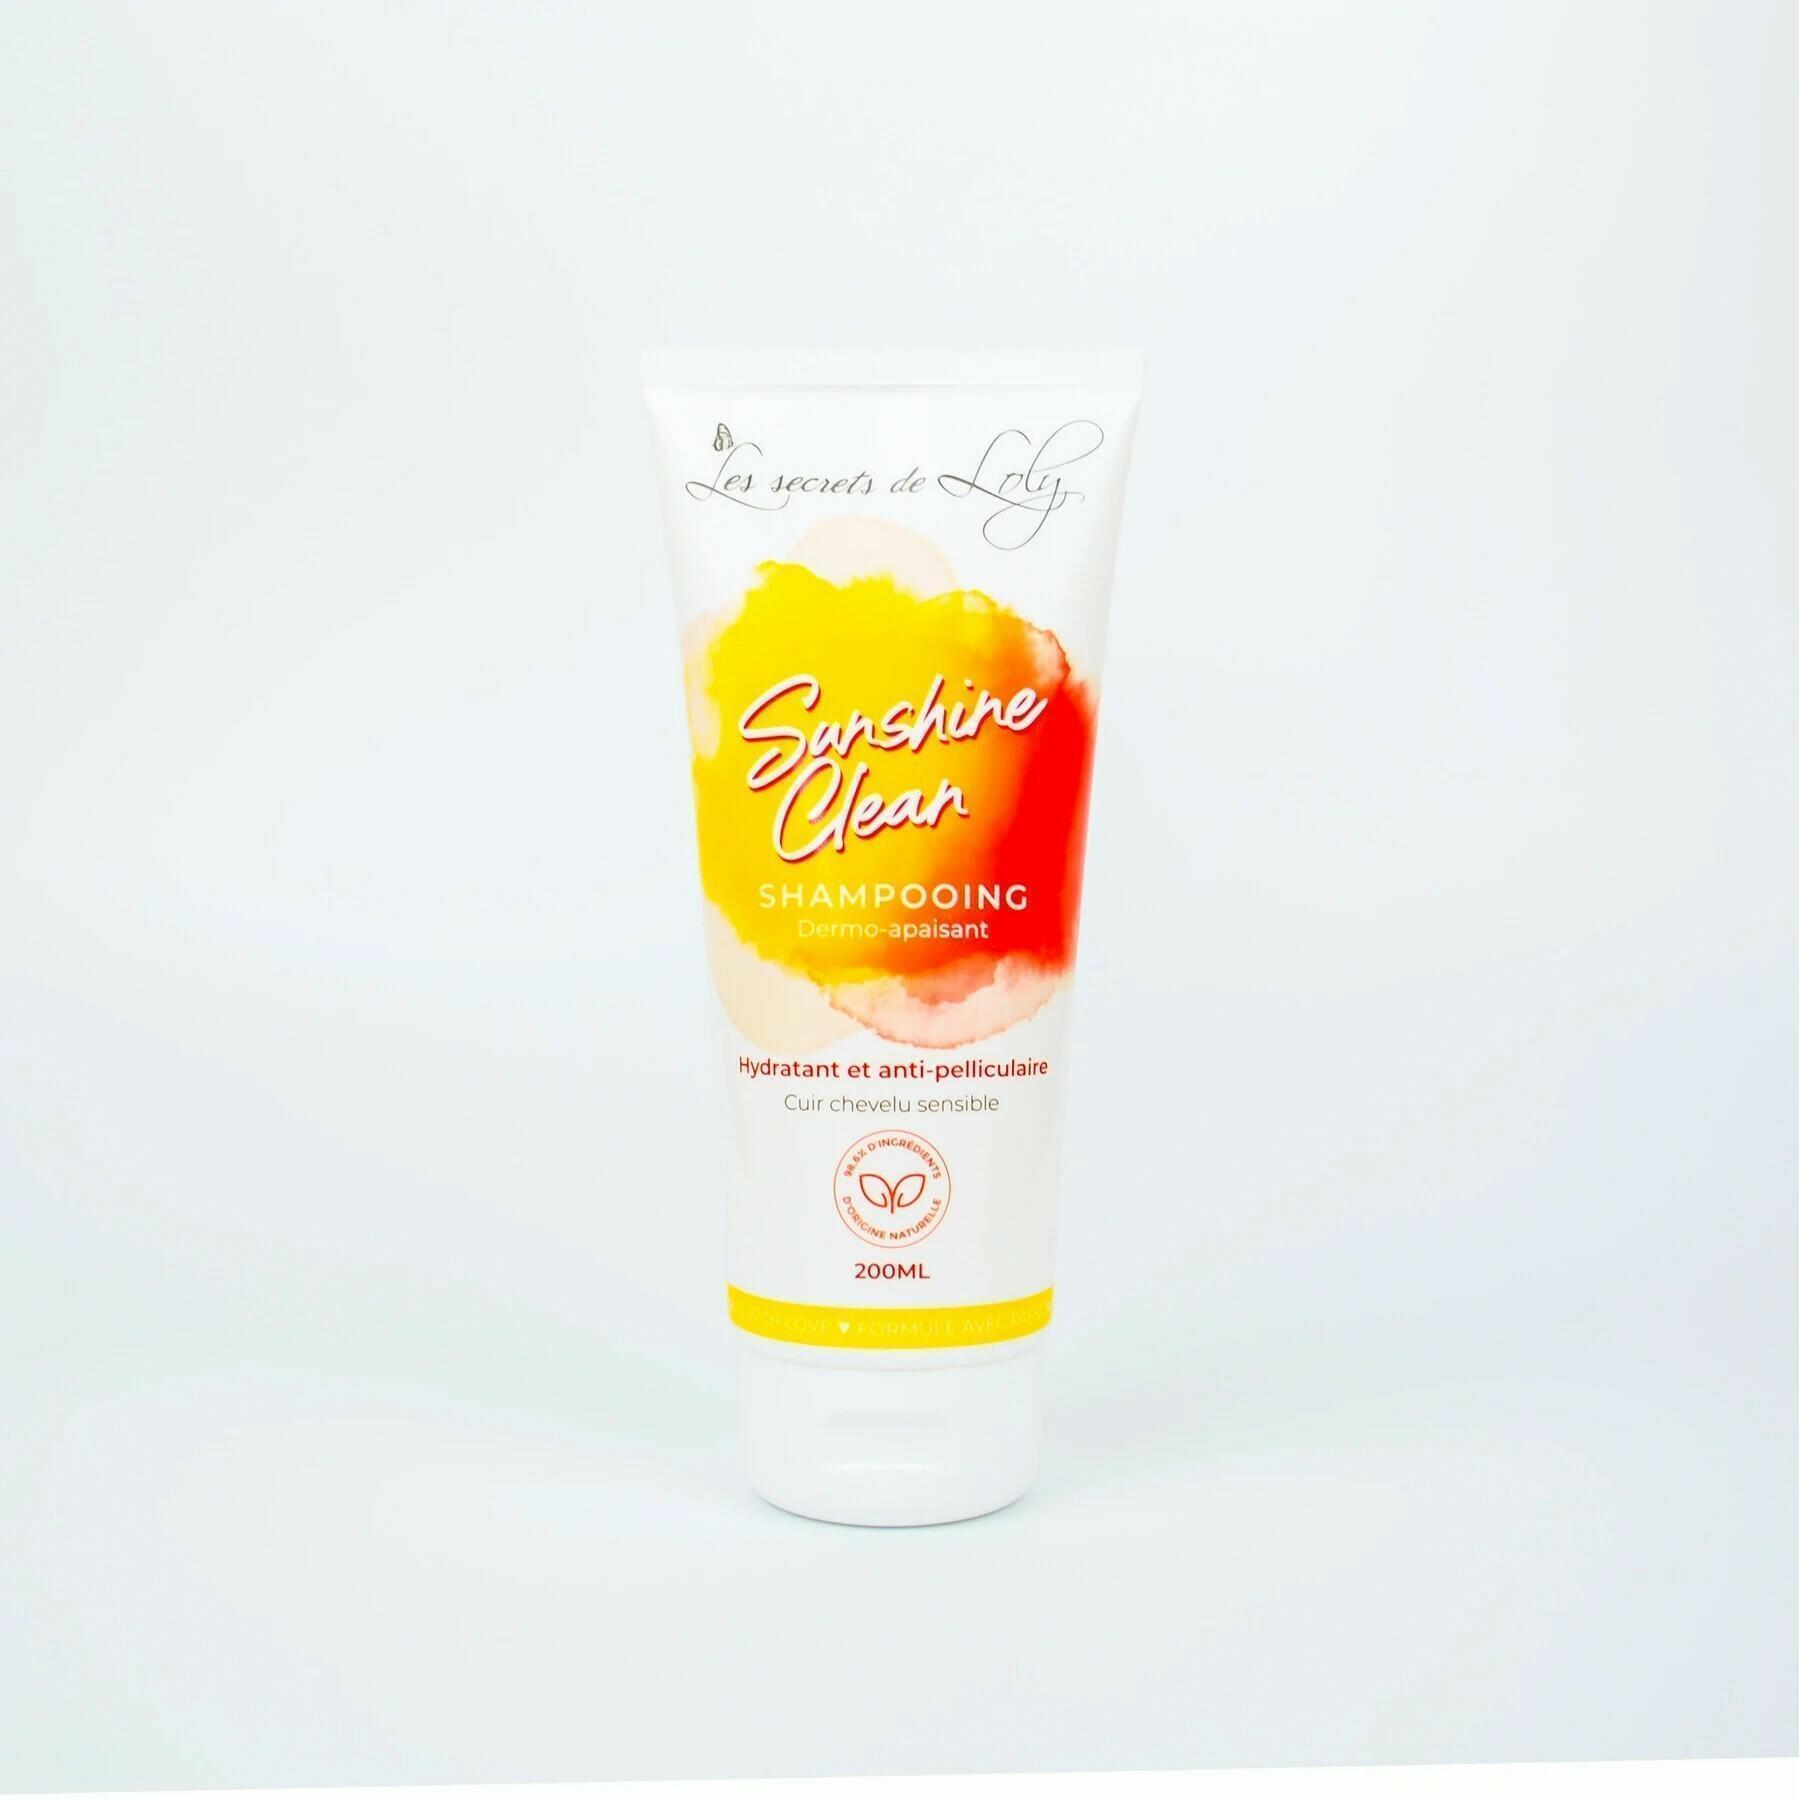 Huidkalmerende shampoo voor vrouwen Les Secrets de Loly Sunshine Clean